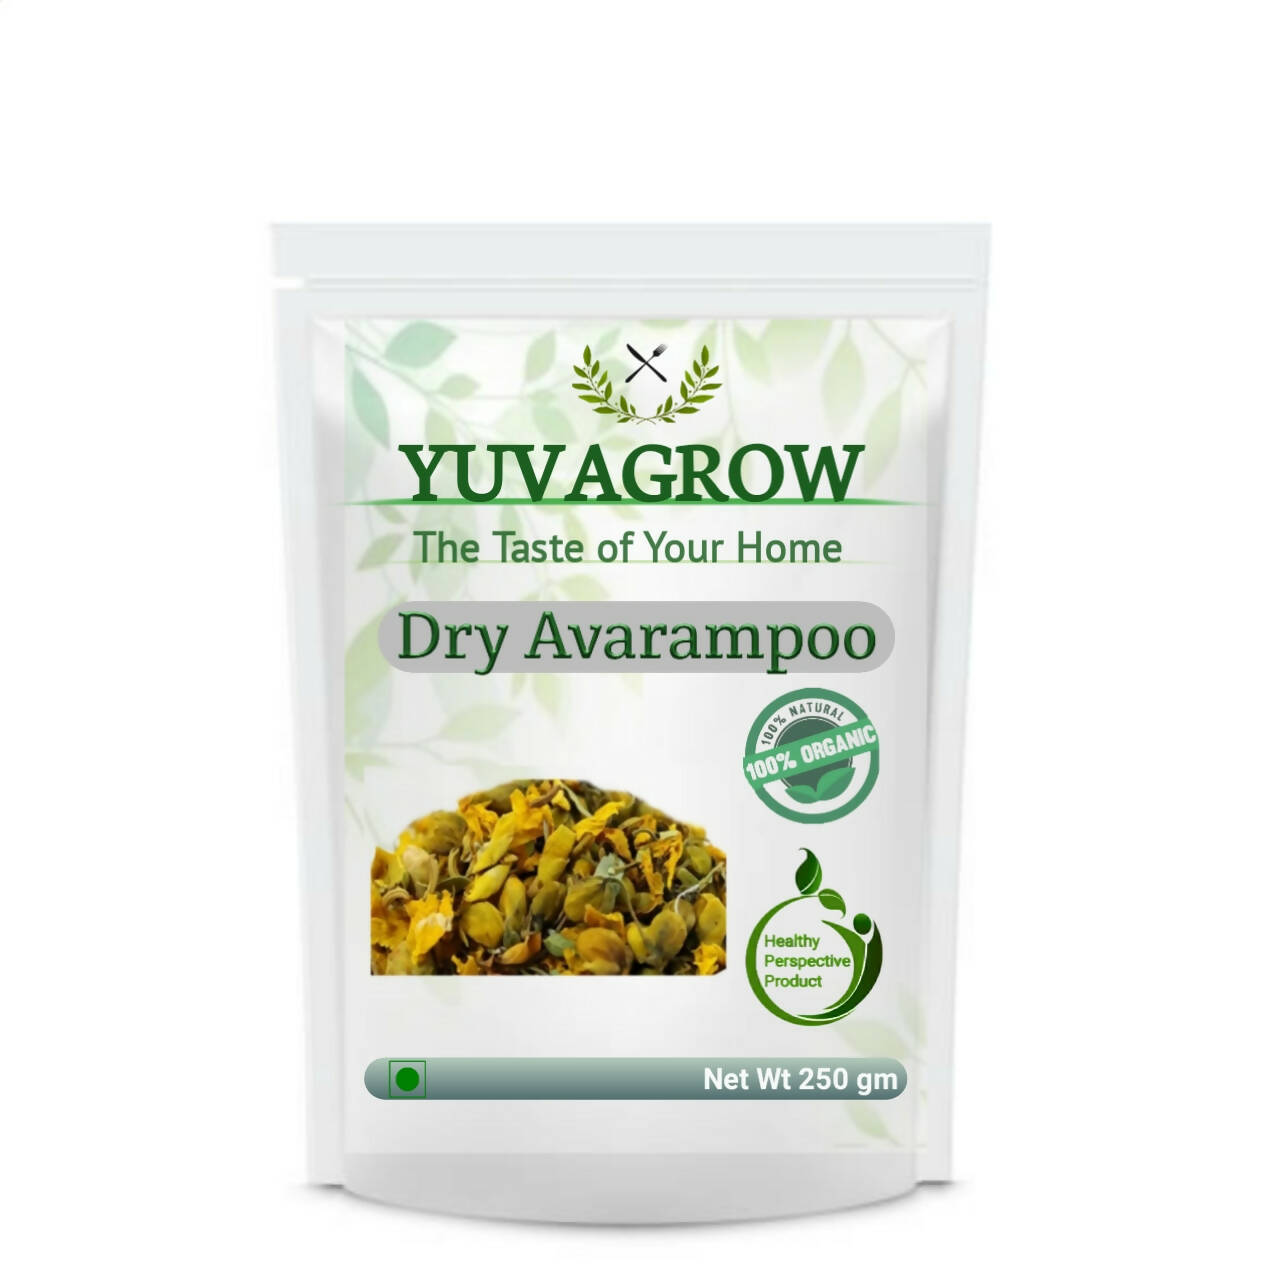 Yuvagrow Dry Avarampoo - buy in USA, Australia, Canada